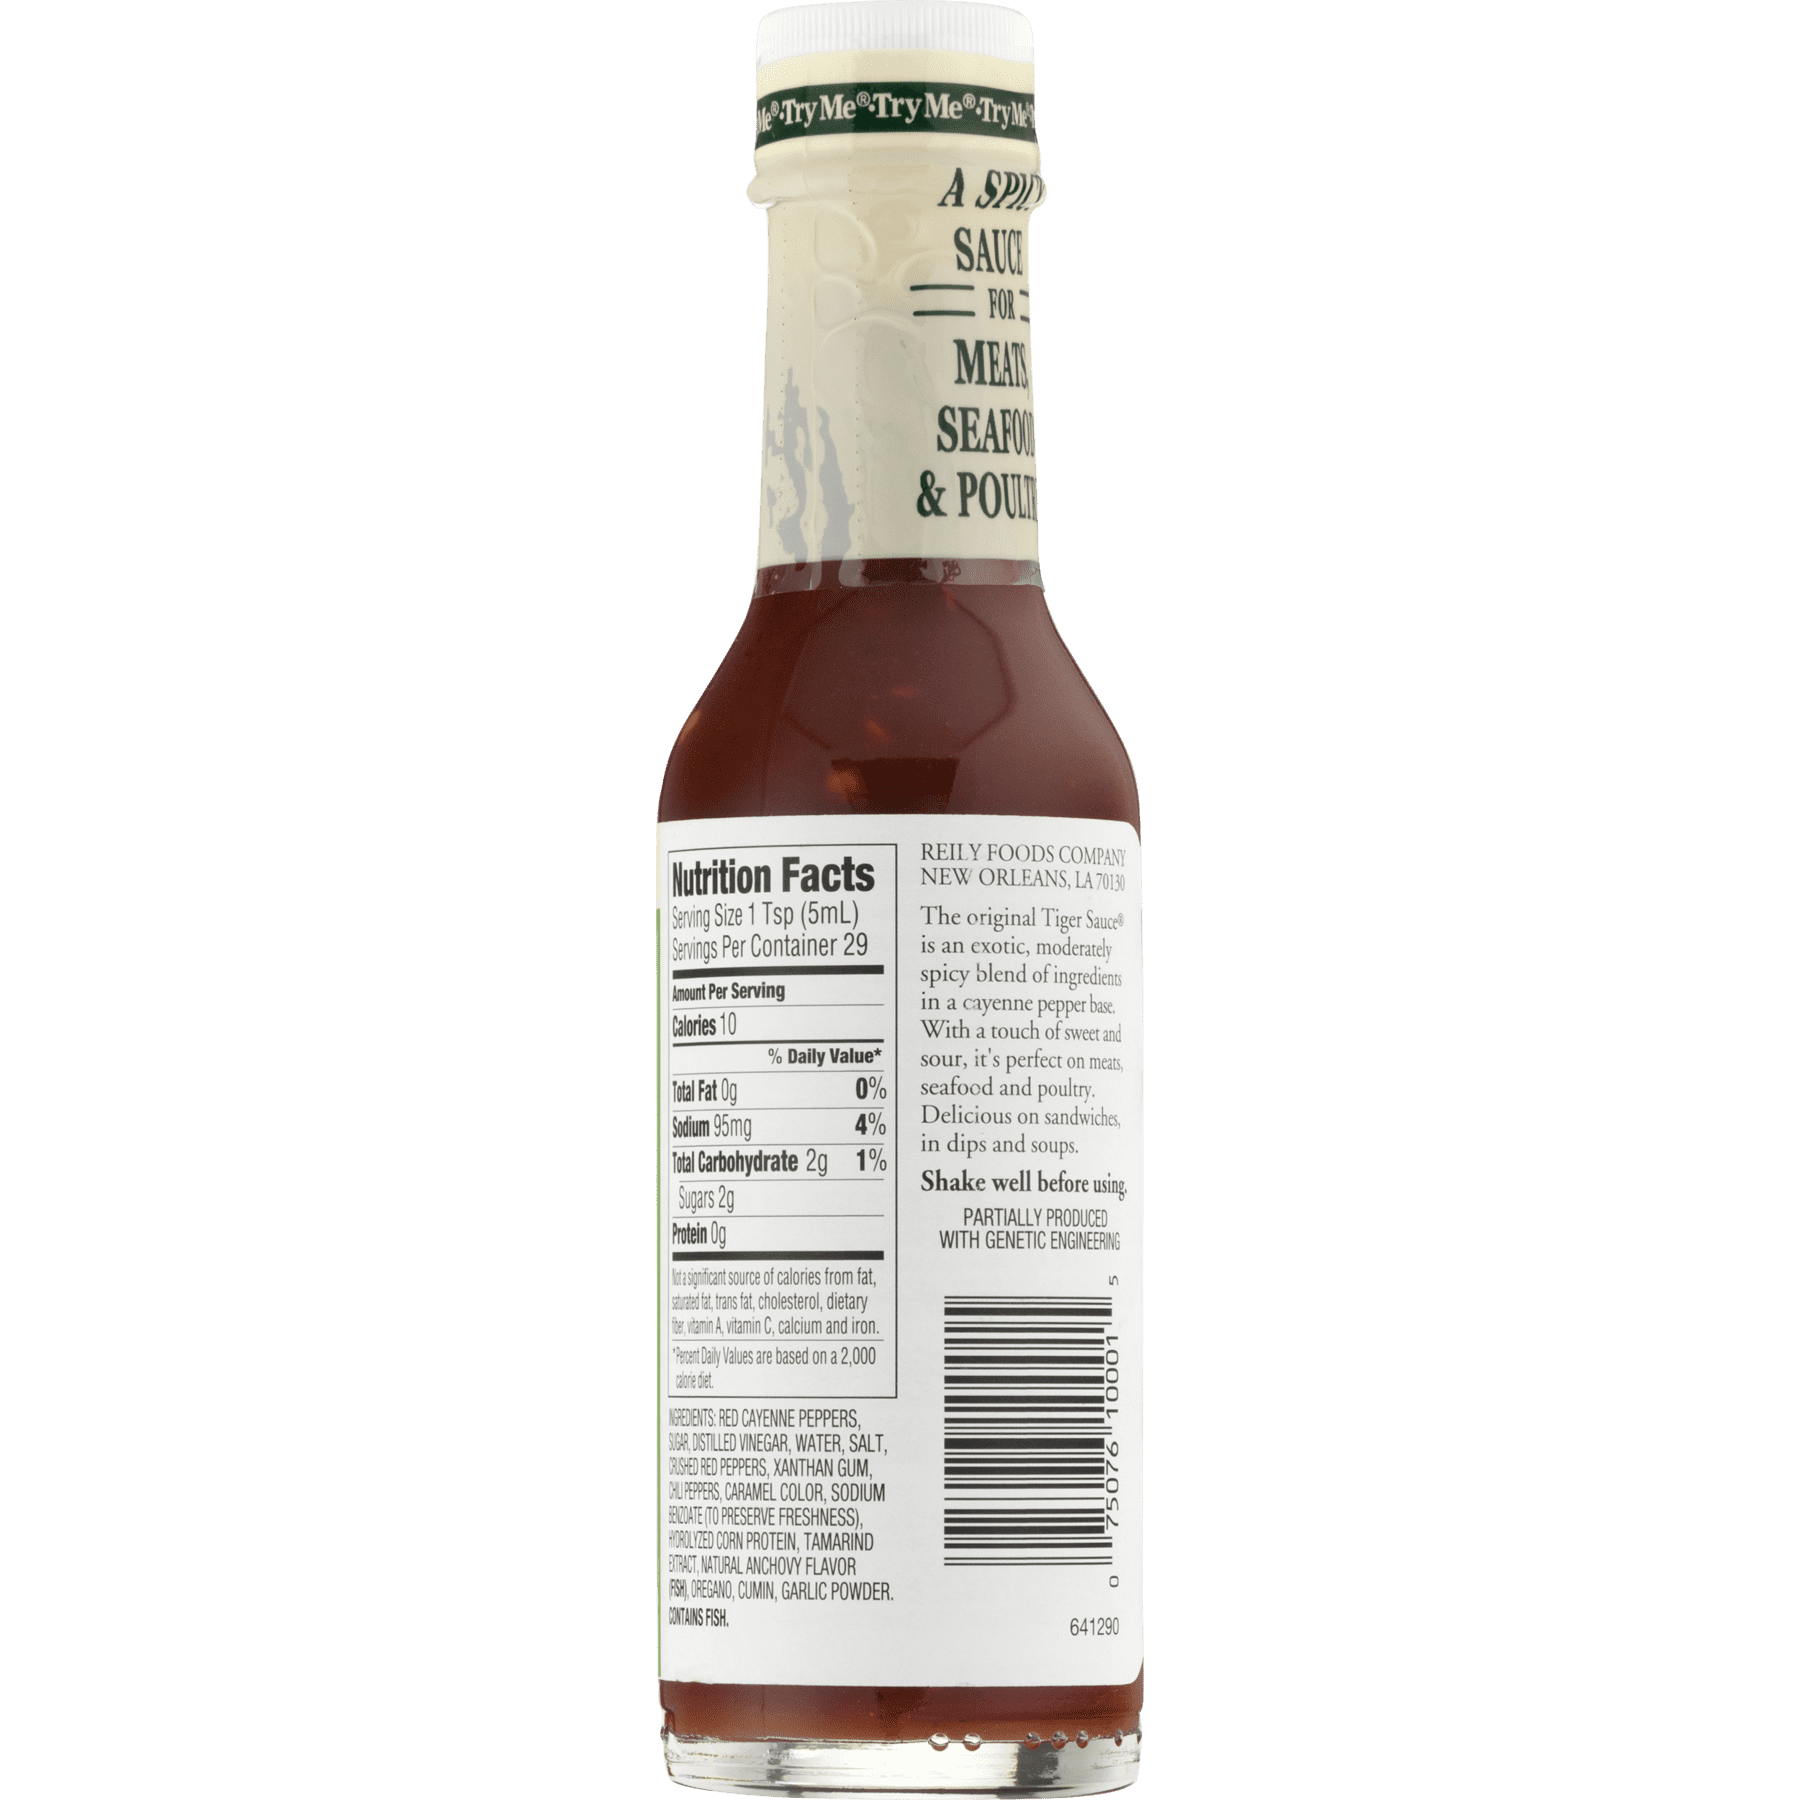 Try Me Tiger Sauce Original Sweet Heat Hot Sauce, 5 fl oz - Kroger